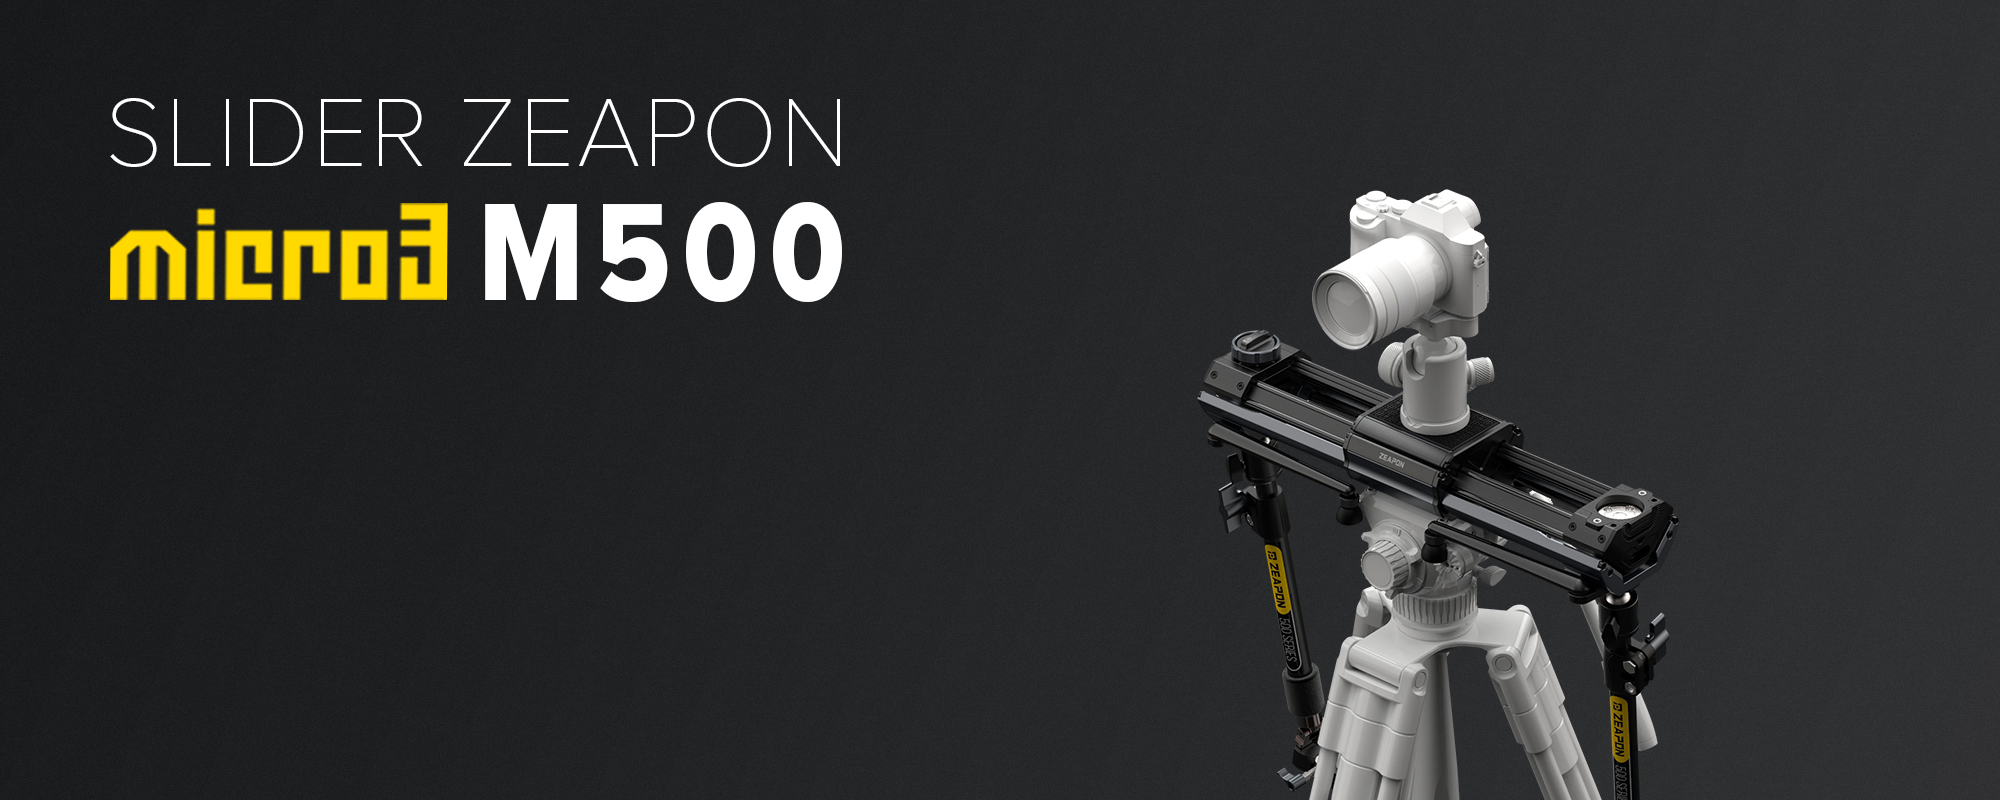 Zeapon Micro 3 M500 Slider